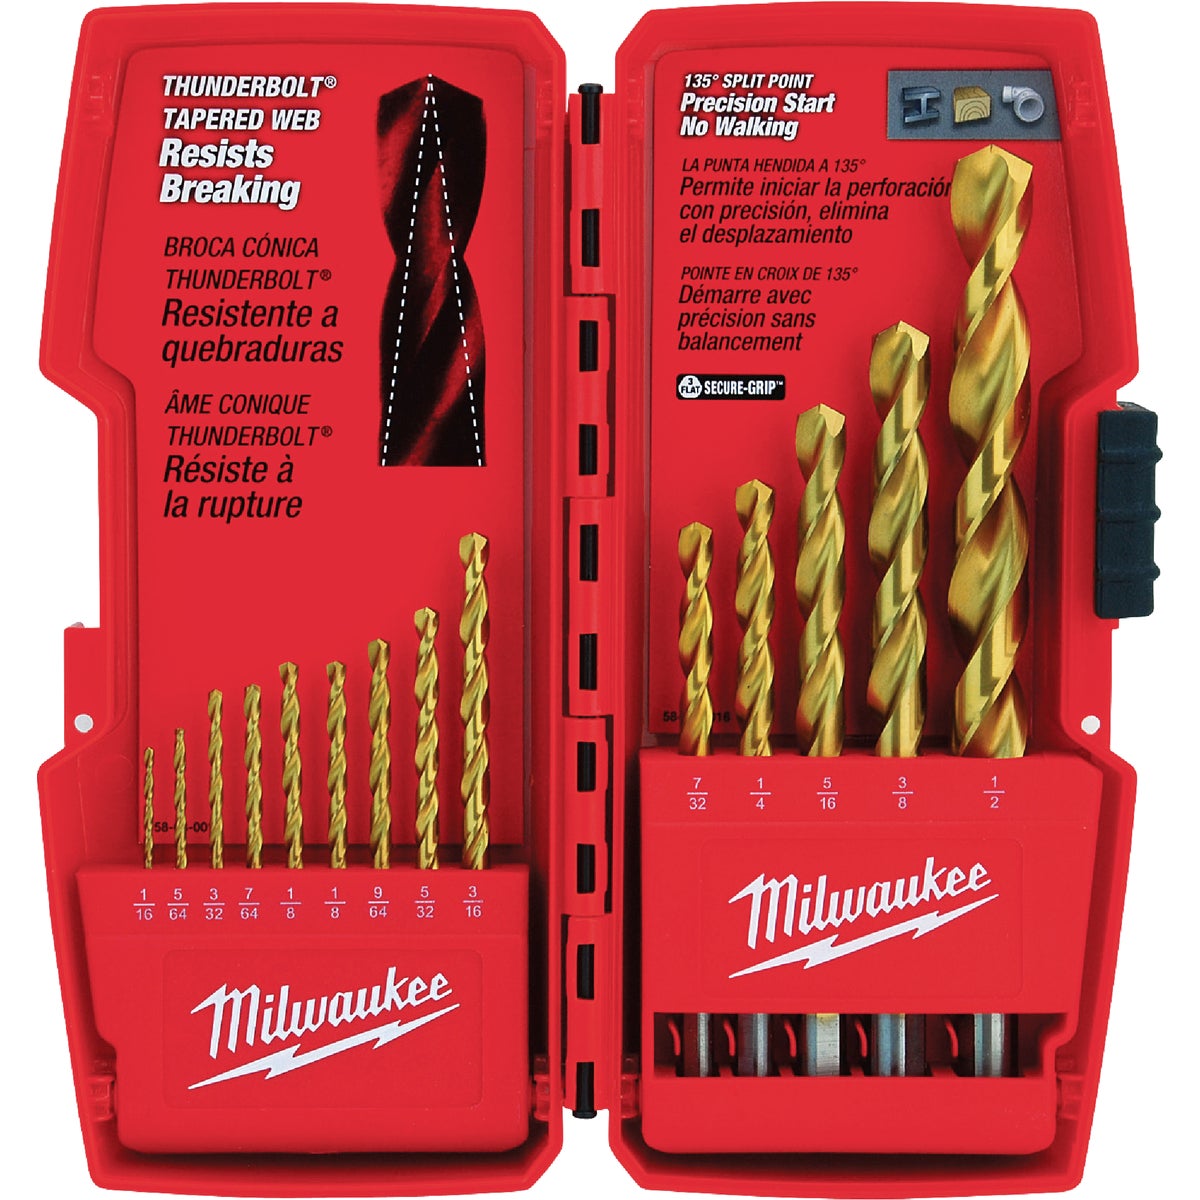 Item 360291, Milwaukee Thunderbolt titanium-coated drill bits are designed for extreme 